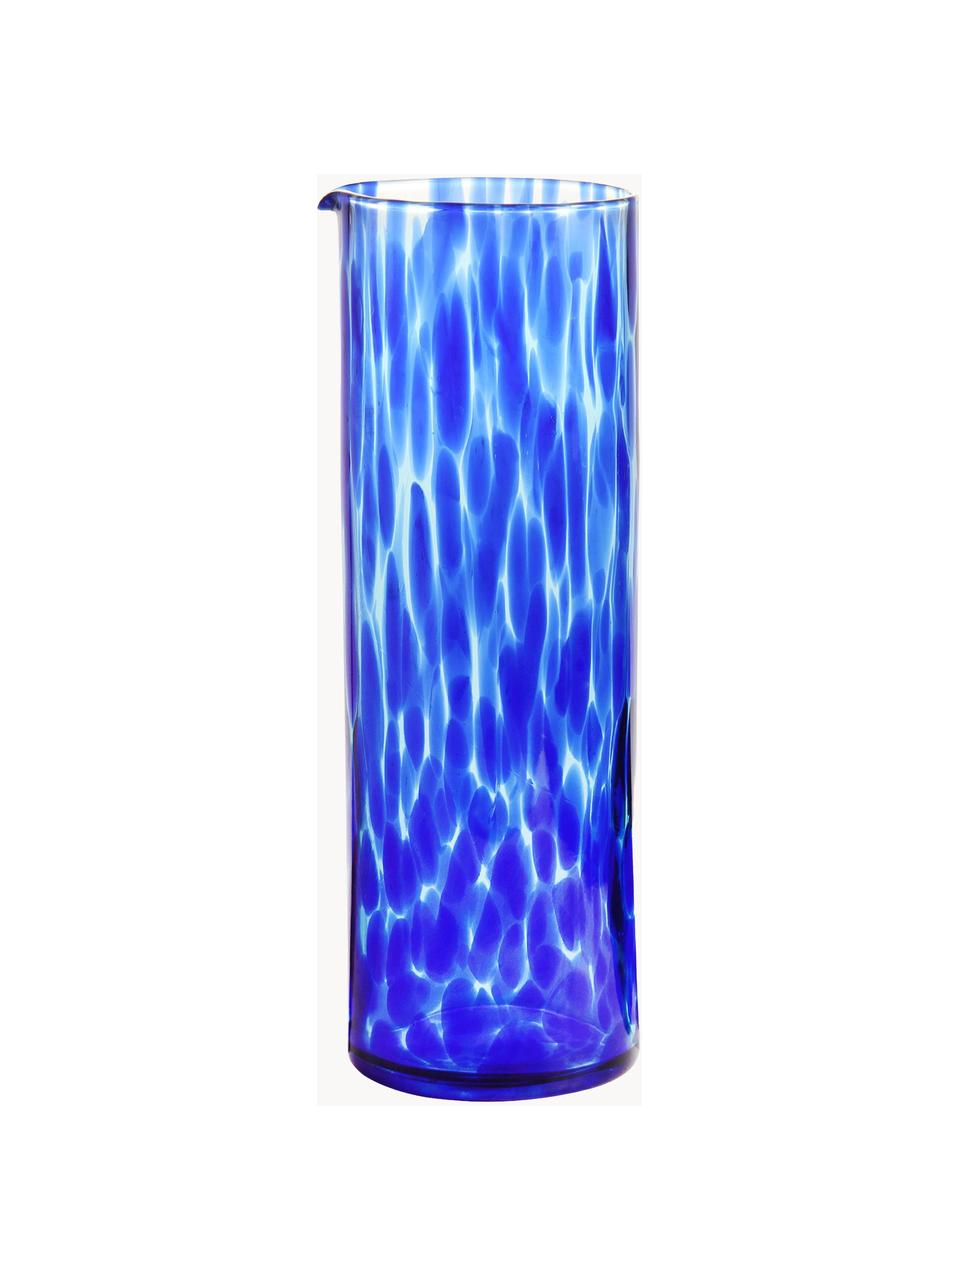 Jarra Tortoise, 800 ml, Vidrio, Tonos azules transparente, 800 ml